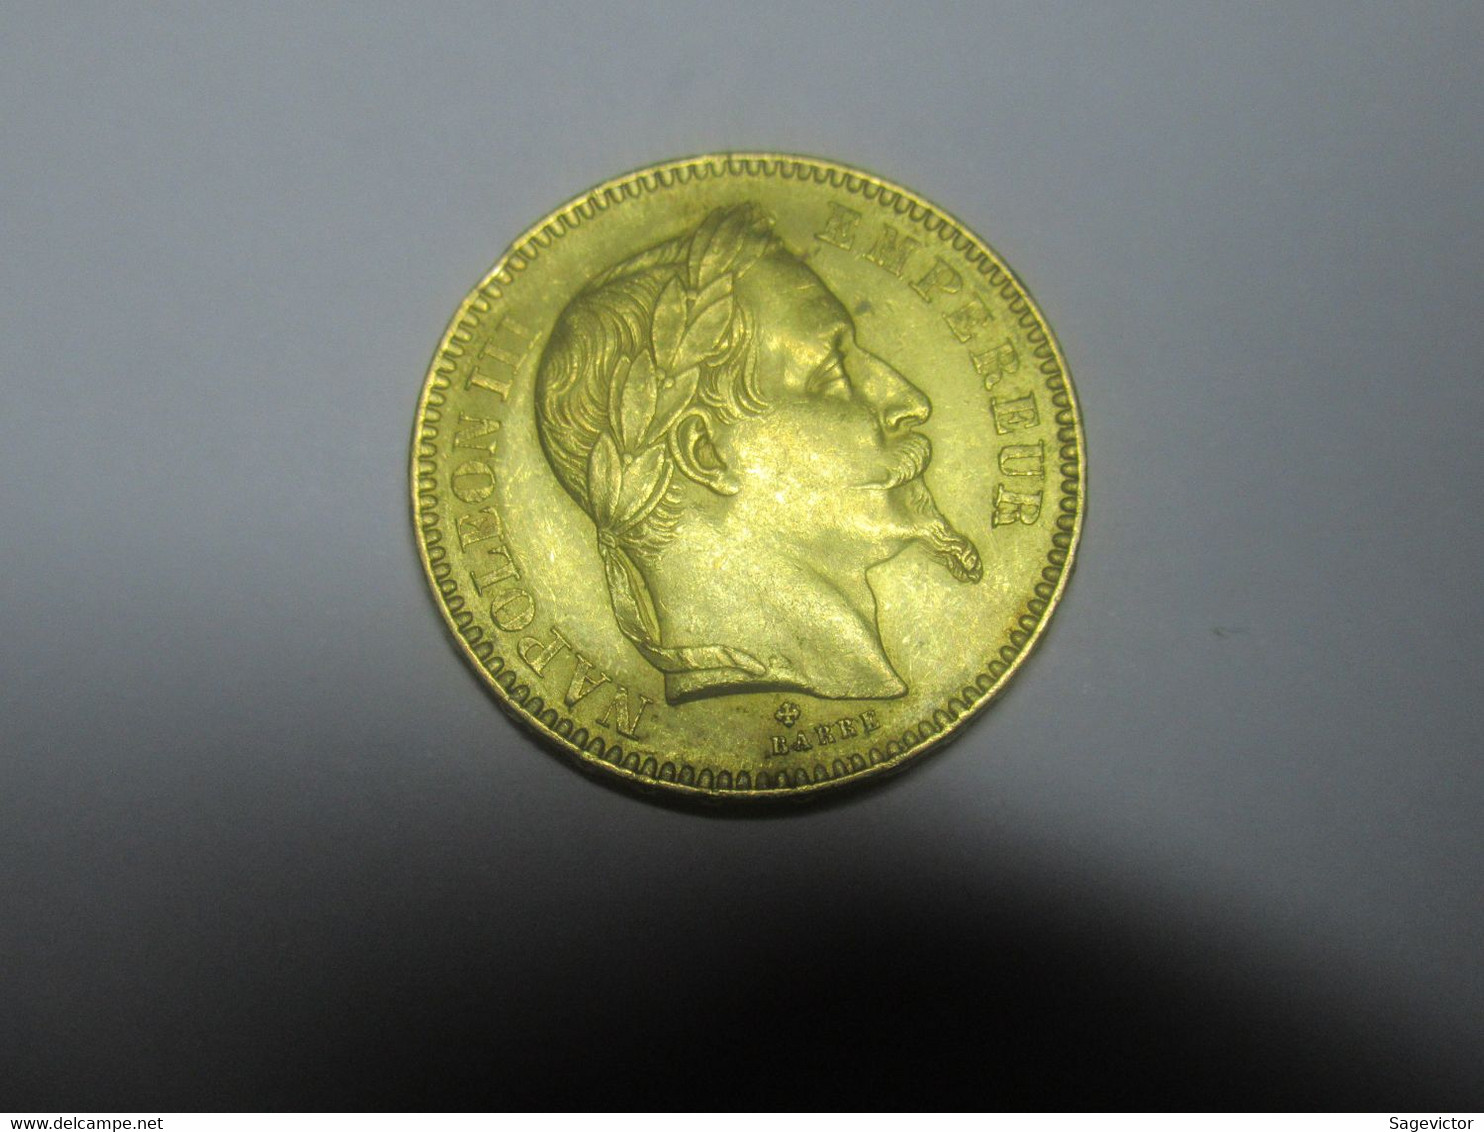 20 FRANCS OR 1866 BB - 20 Francs (gold)